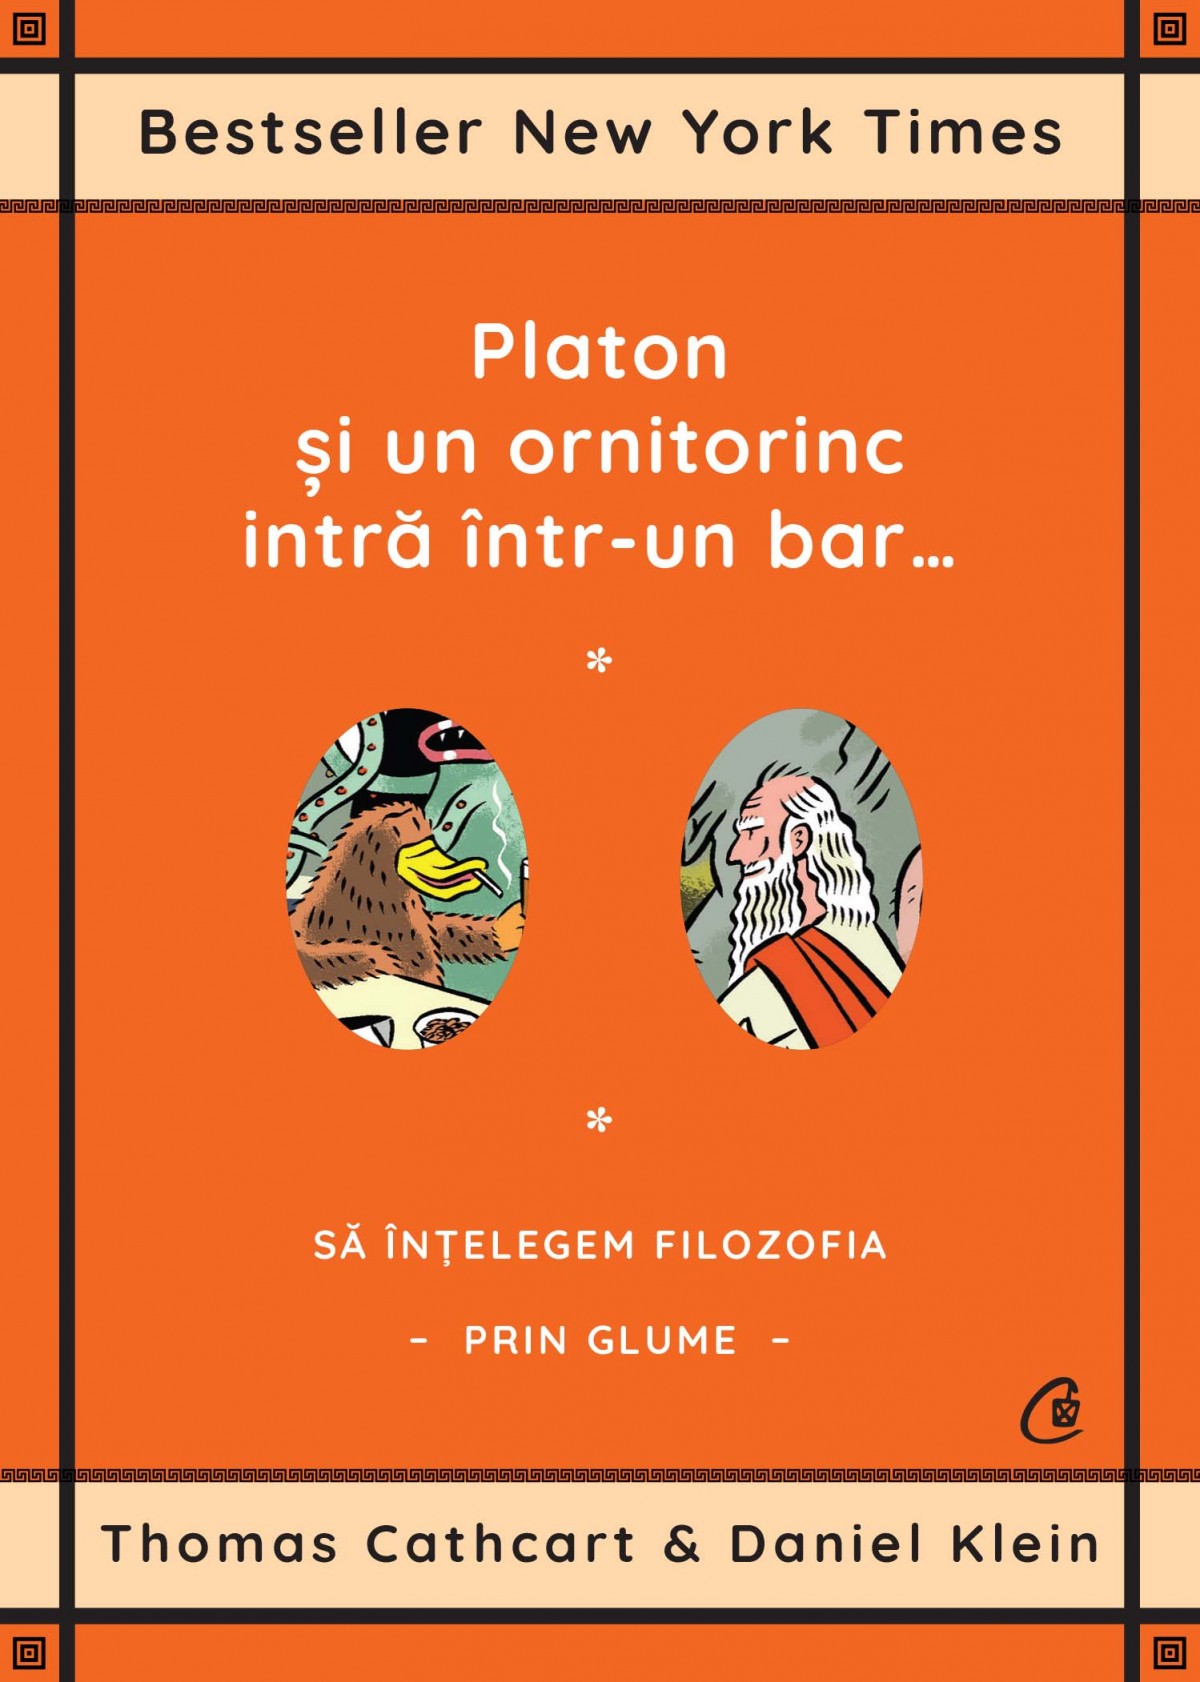 Platon si un ornitorinc intra intr-un bar… | Thomas Cathcart, Daniel Klein carturesti.ro poza bestsellers.ro